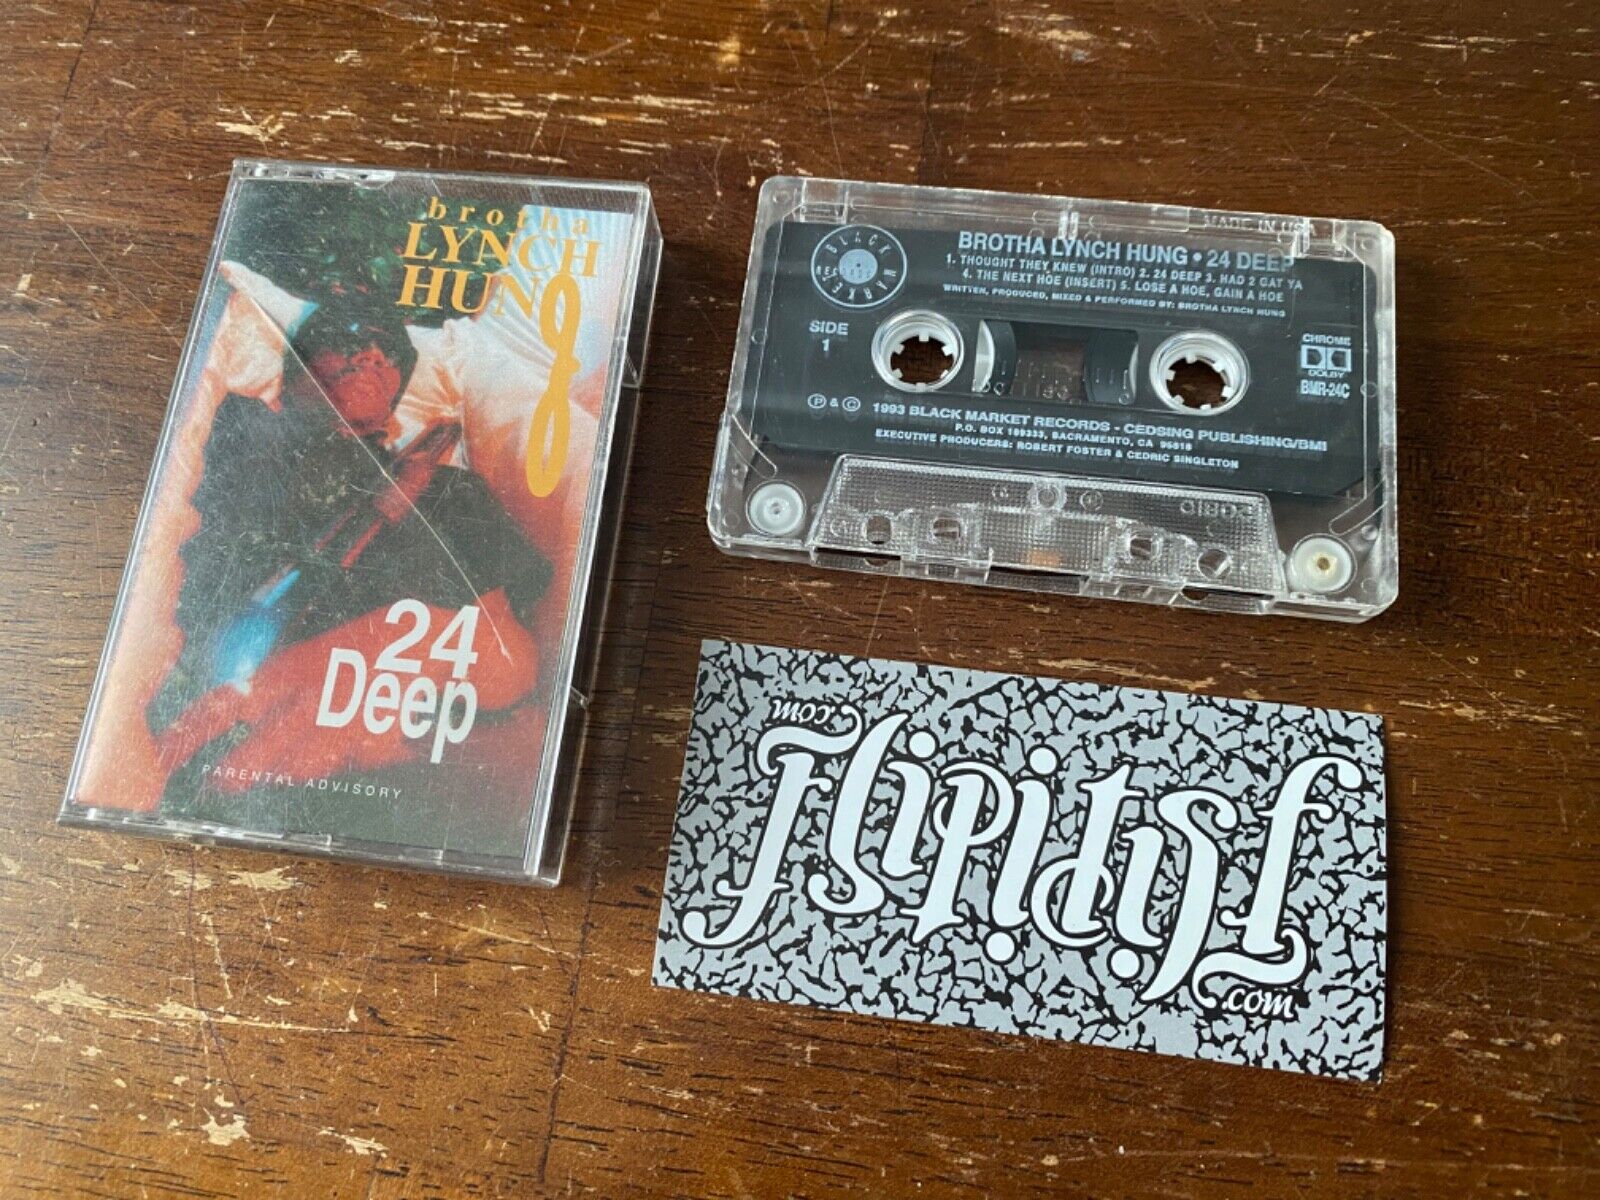 VTG 1993 BROTHA LYNCH HUNG 24 DEEP CASSETTE TAPE RAP BLACK MARKET RECORDS MUSIC